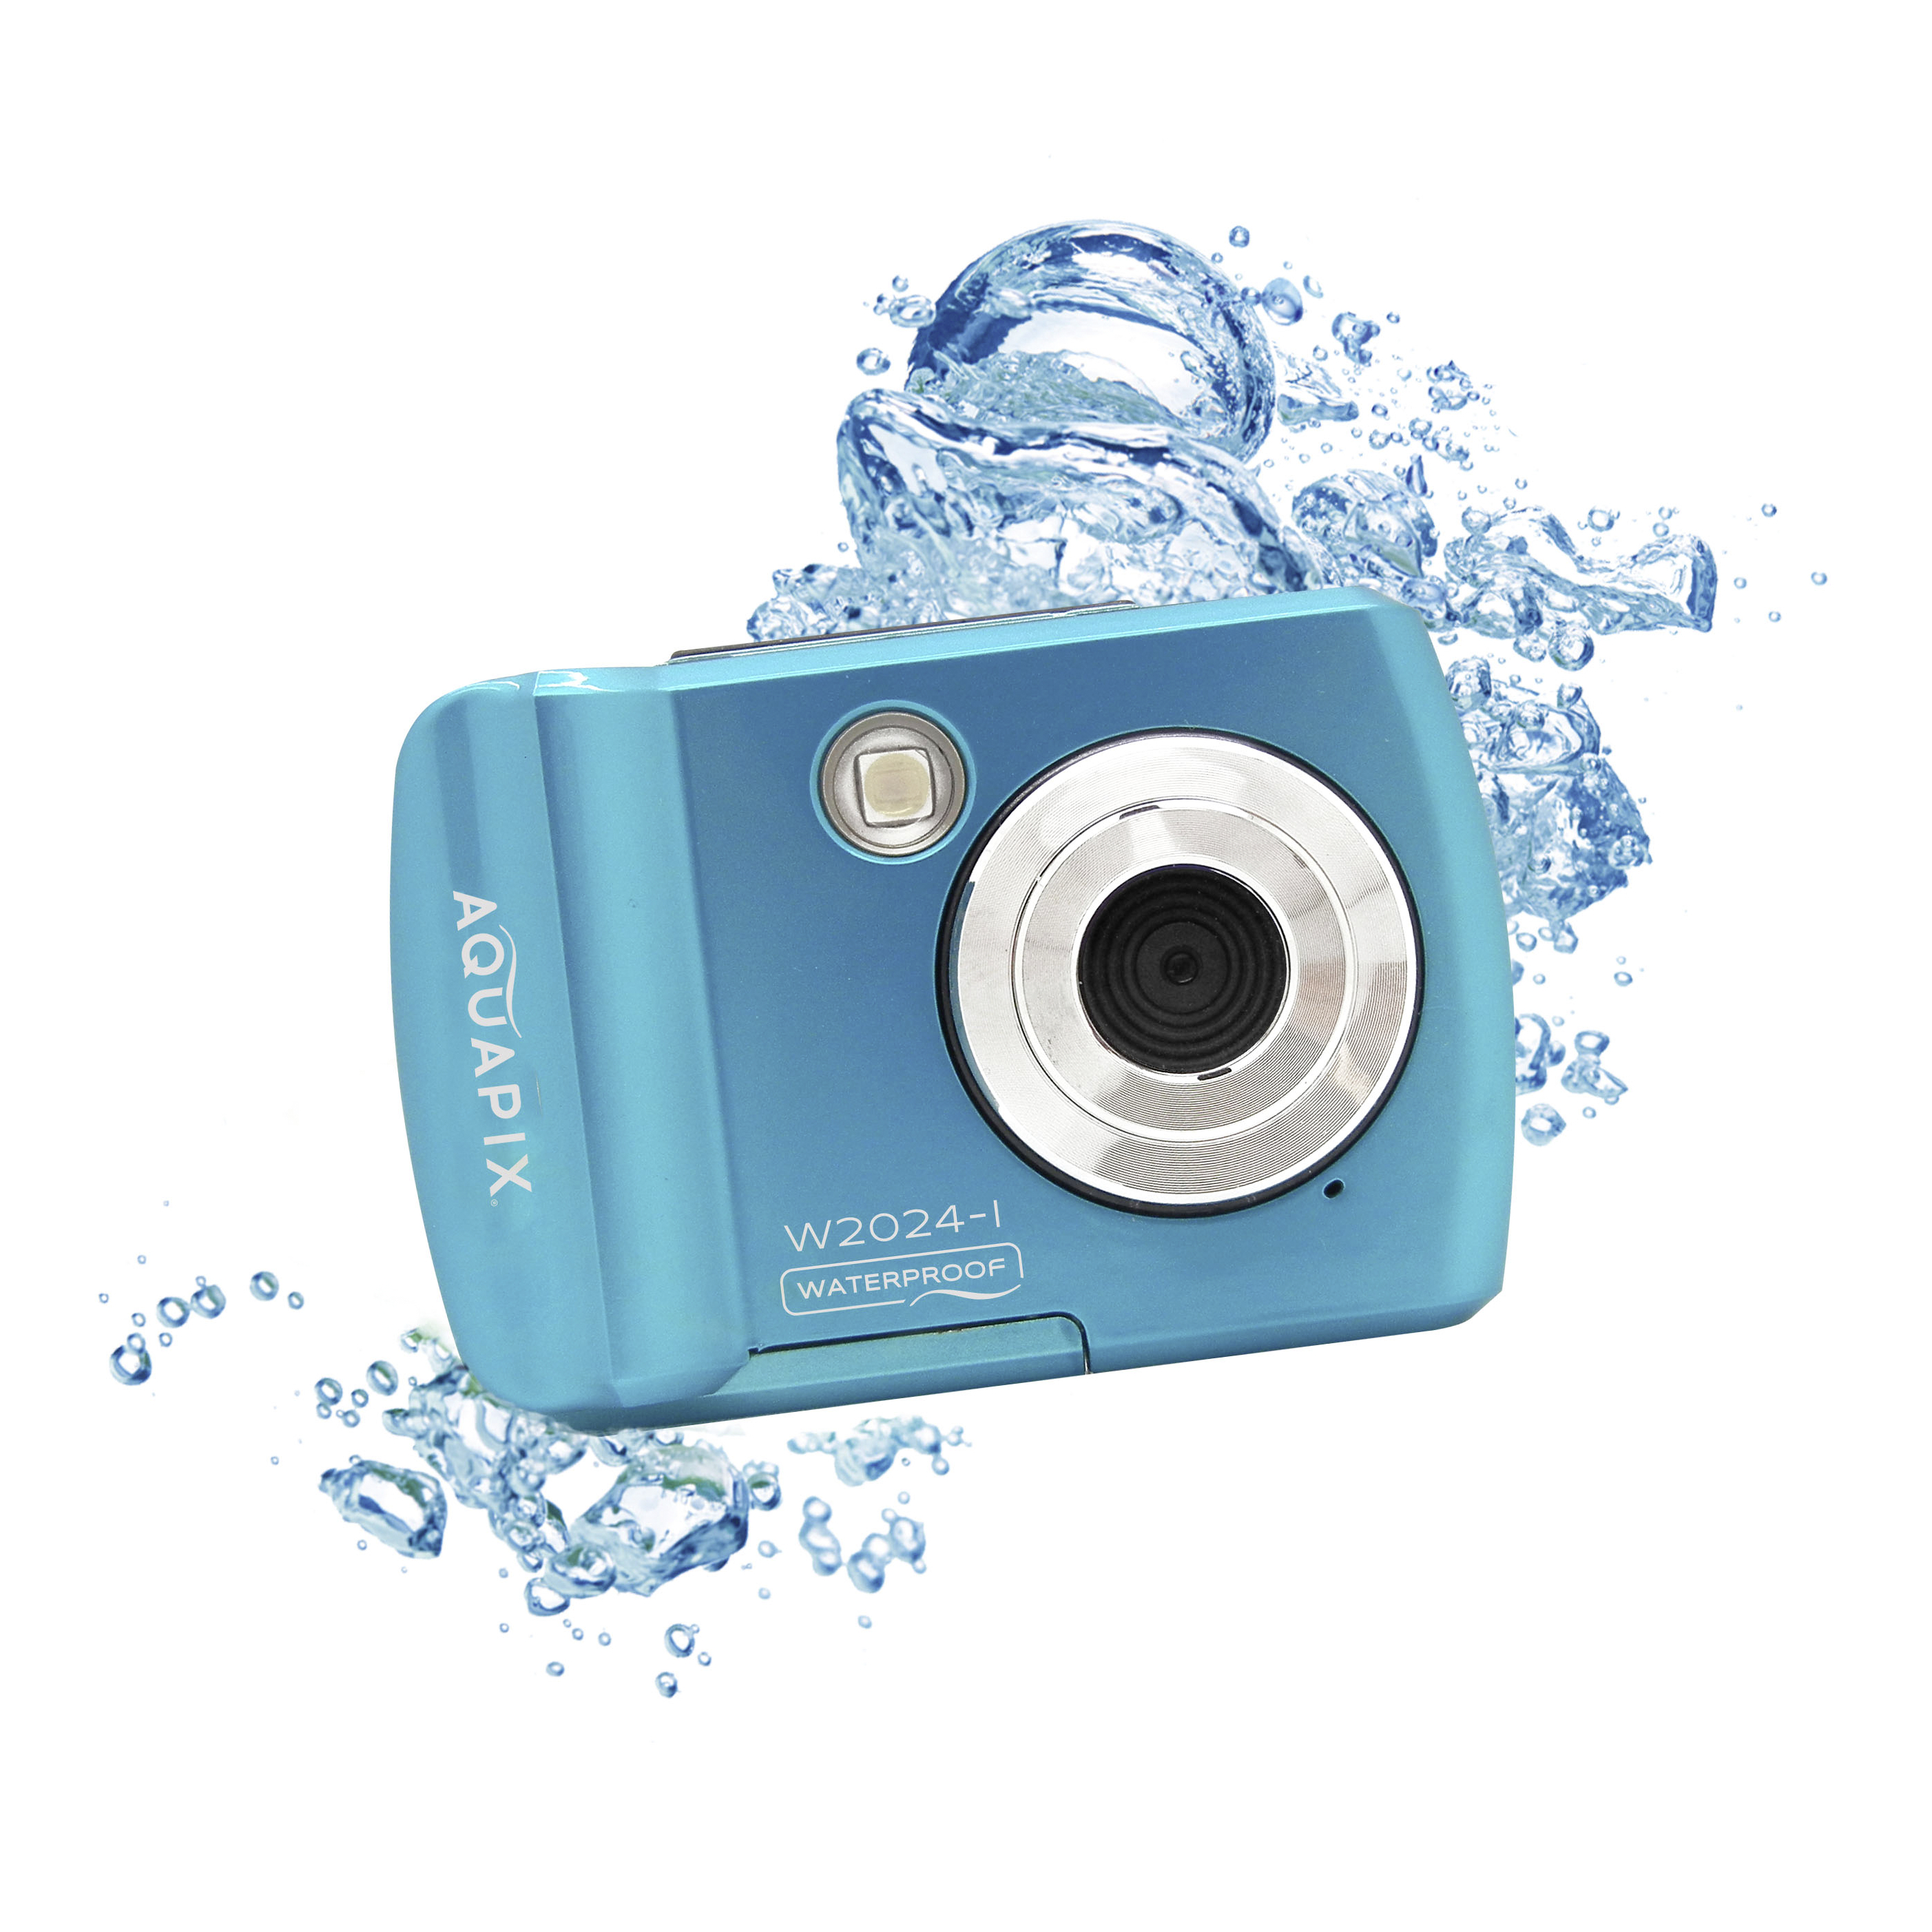 W2024 EASYPIX , Splash Unterwasserkamera opt. Aquapix blau, Farb-Display Easypix k.A. Zoom,